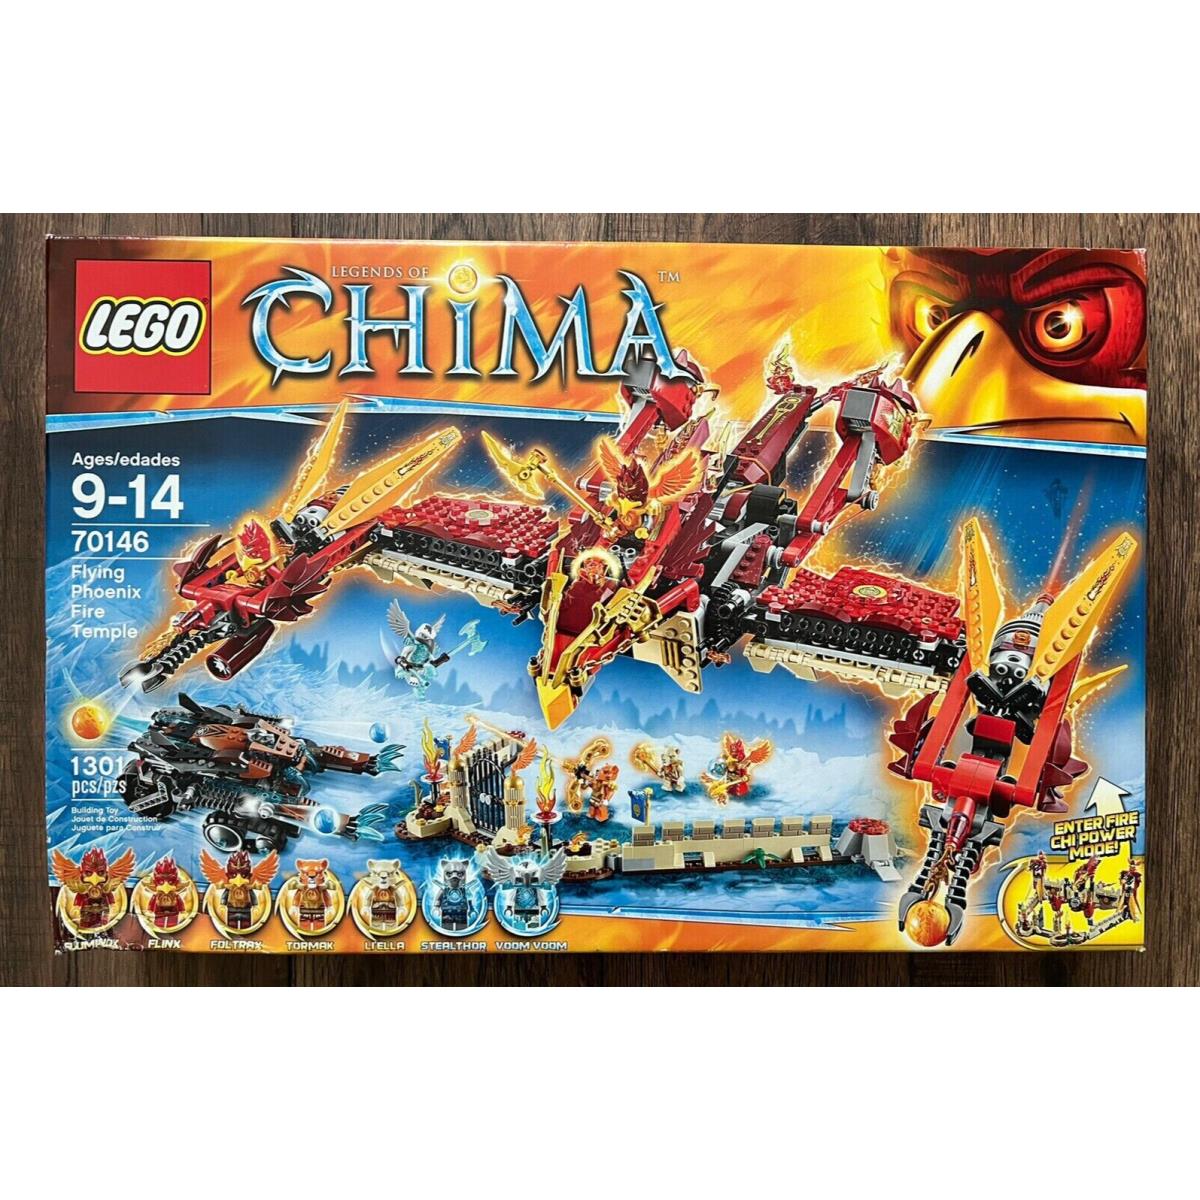 Lego Legends of Chima Flying Phoenix Fire Temple 70146 Building Kit 1301 Pcs